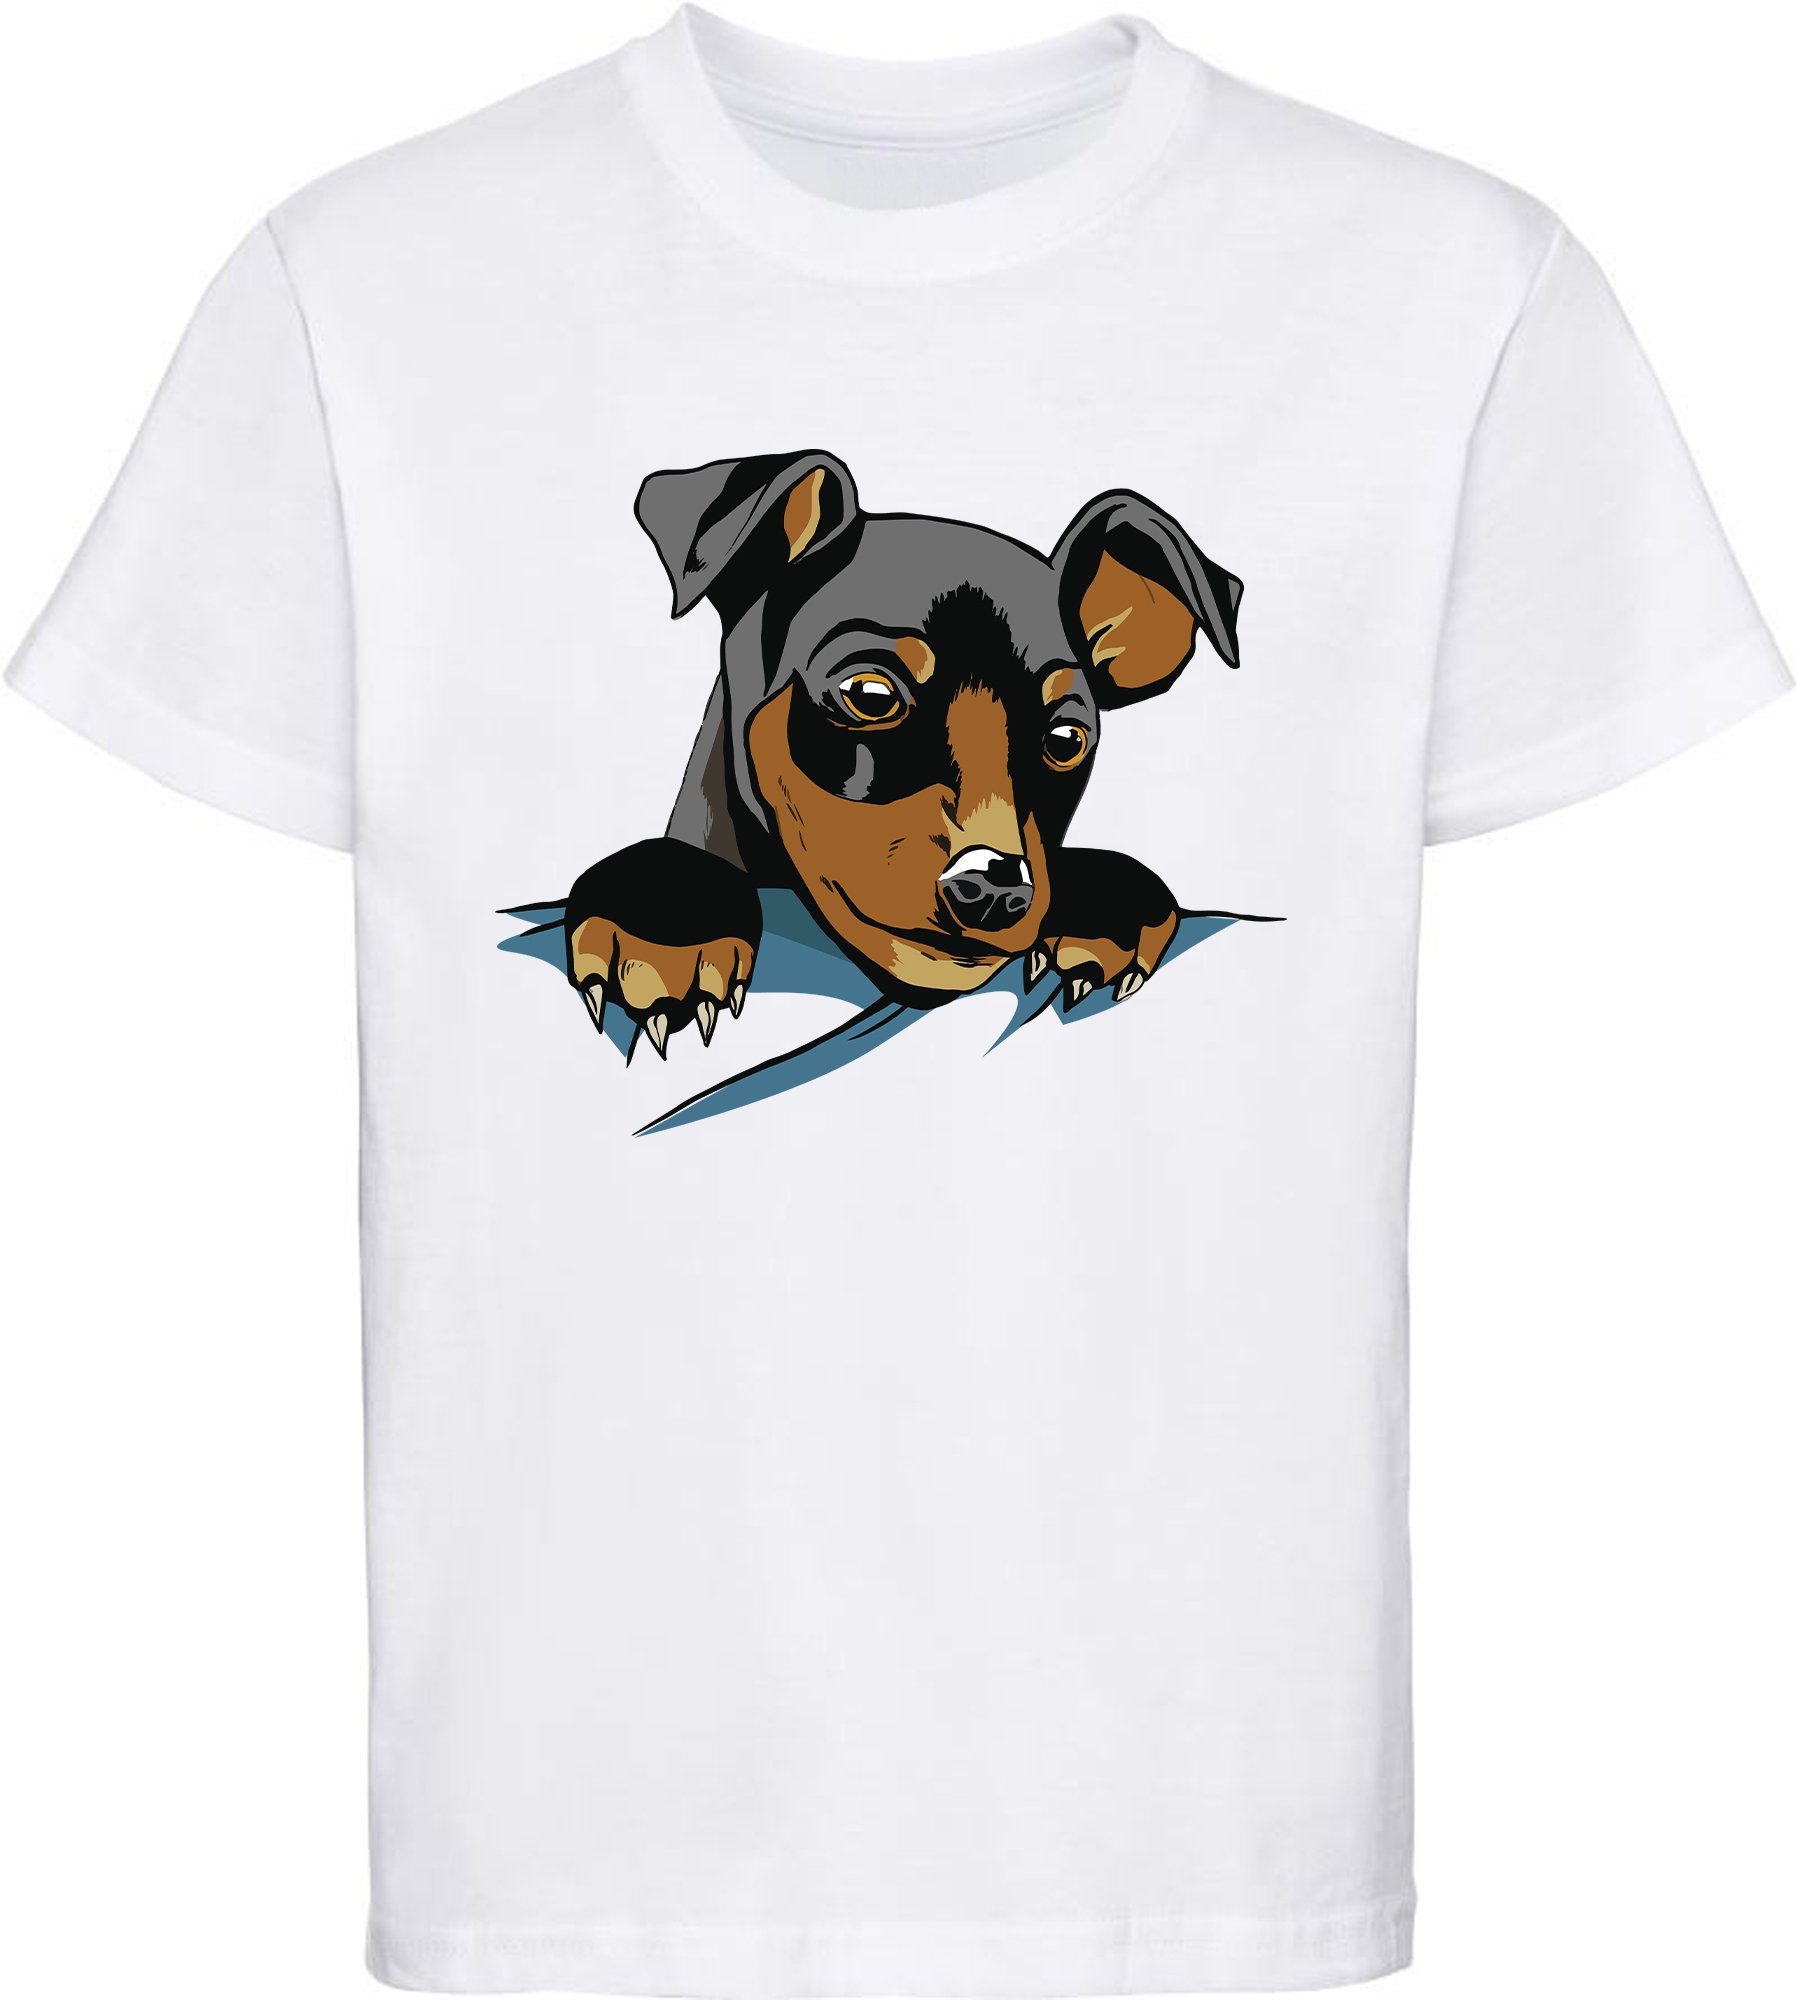 - Kinder Aufdruck, Süßer Print-Shirt i227 mit Hunde weiss Welpe T-Shirt bedrucktes MyDesign24 Baumwollshirt